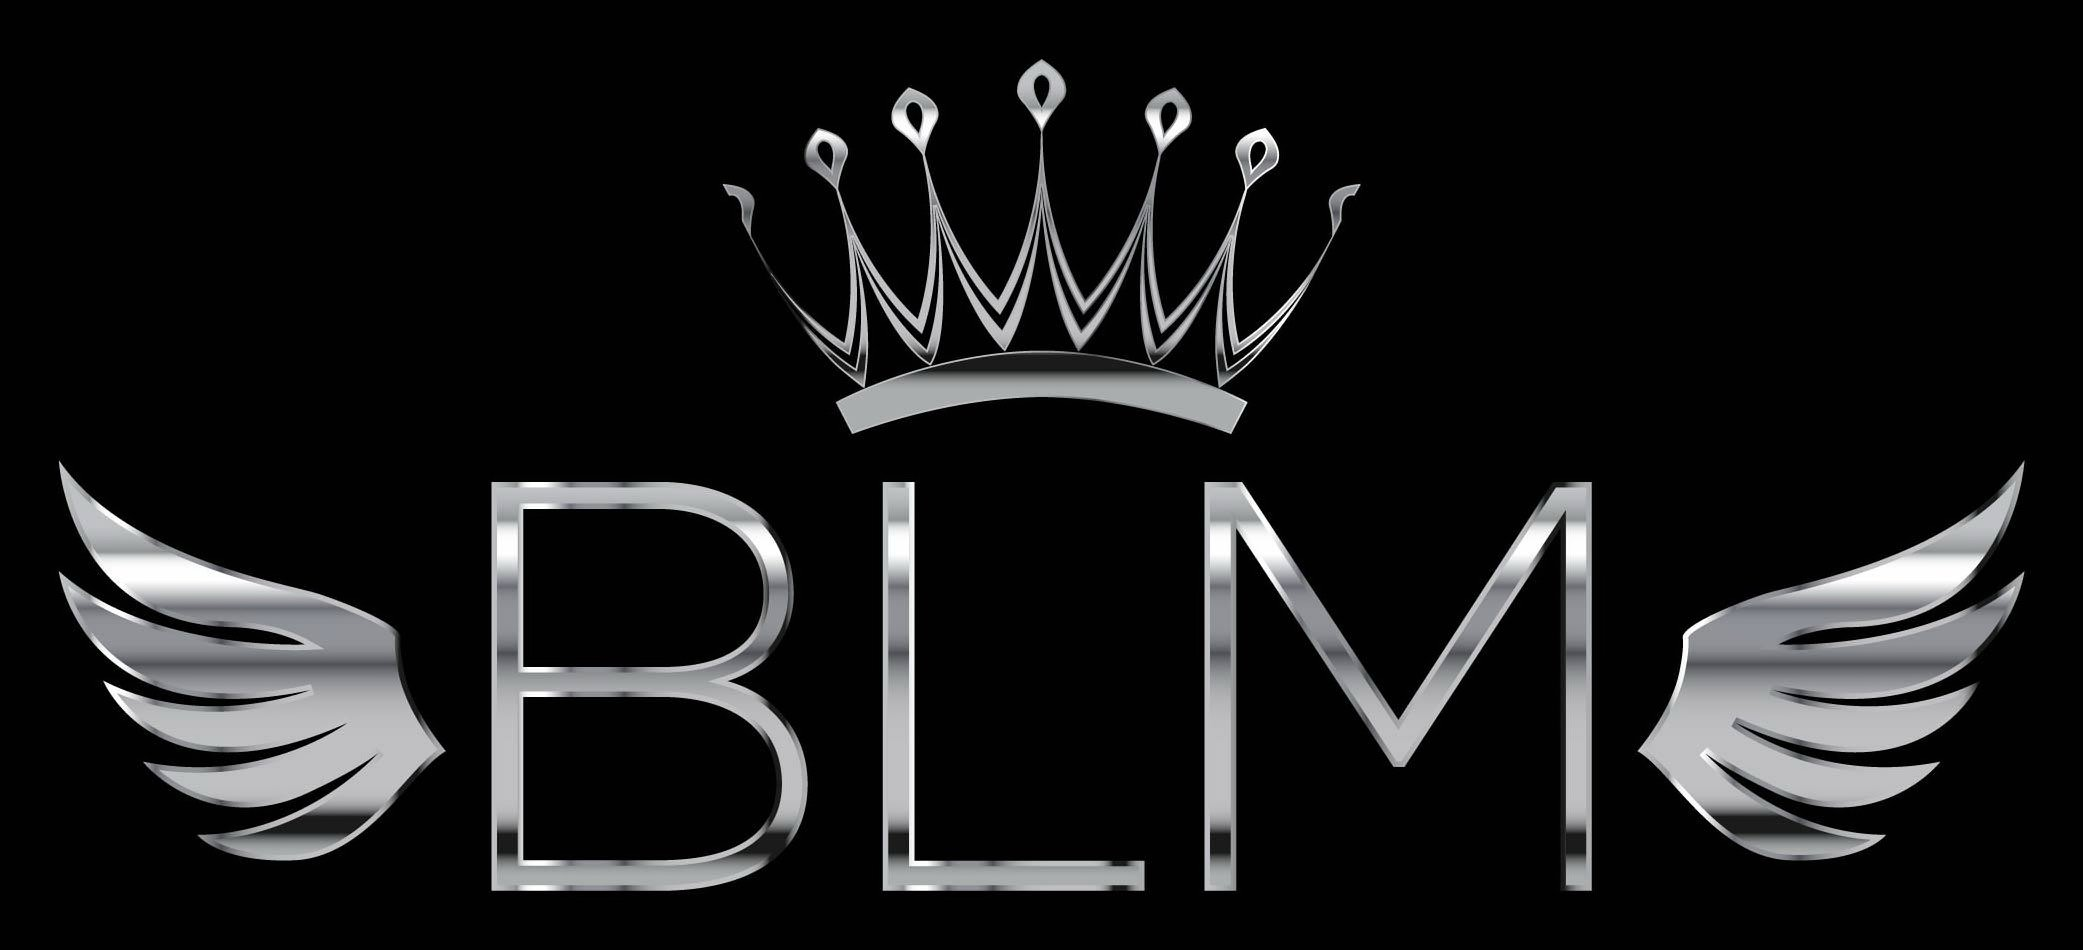 Trademark Logo BLM